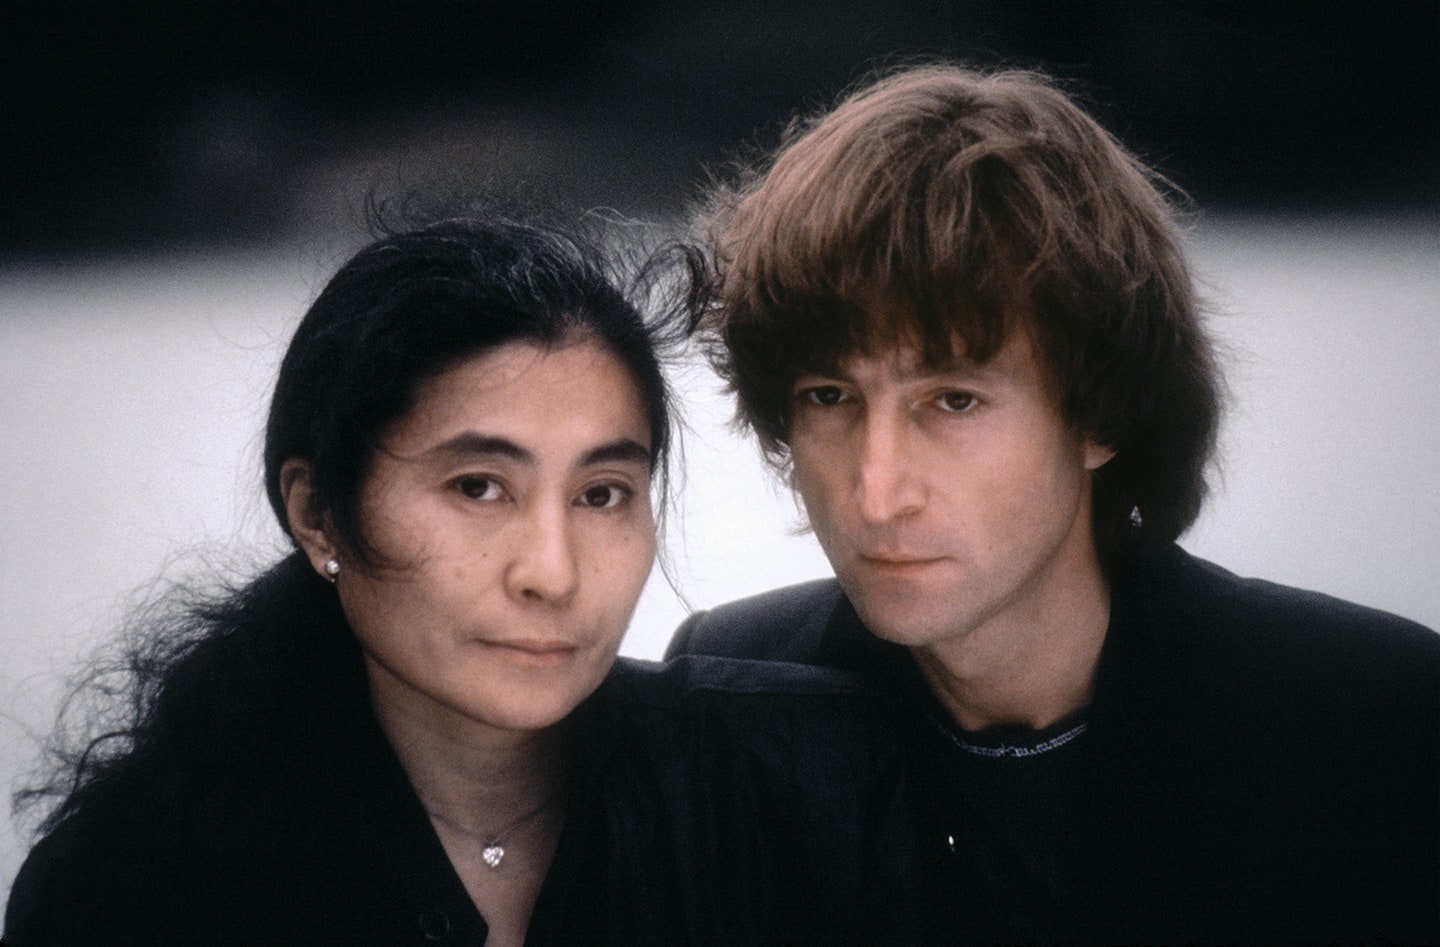 Double Fantasy: Rarely Seen Photo of Yoko Ono and John Lennon